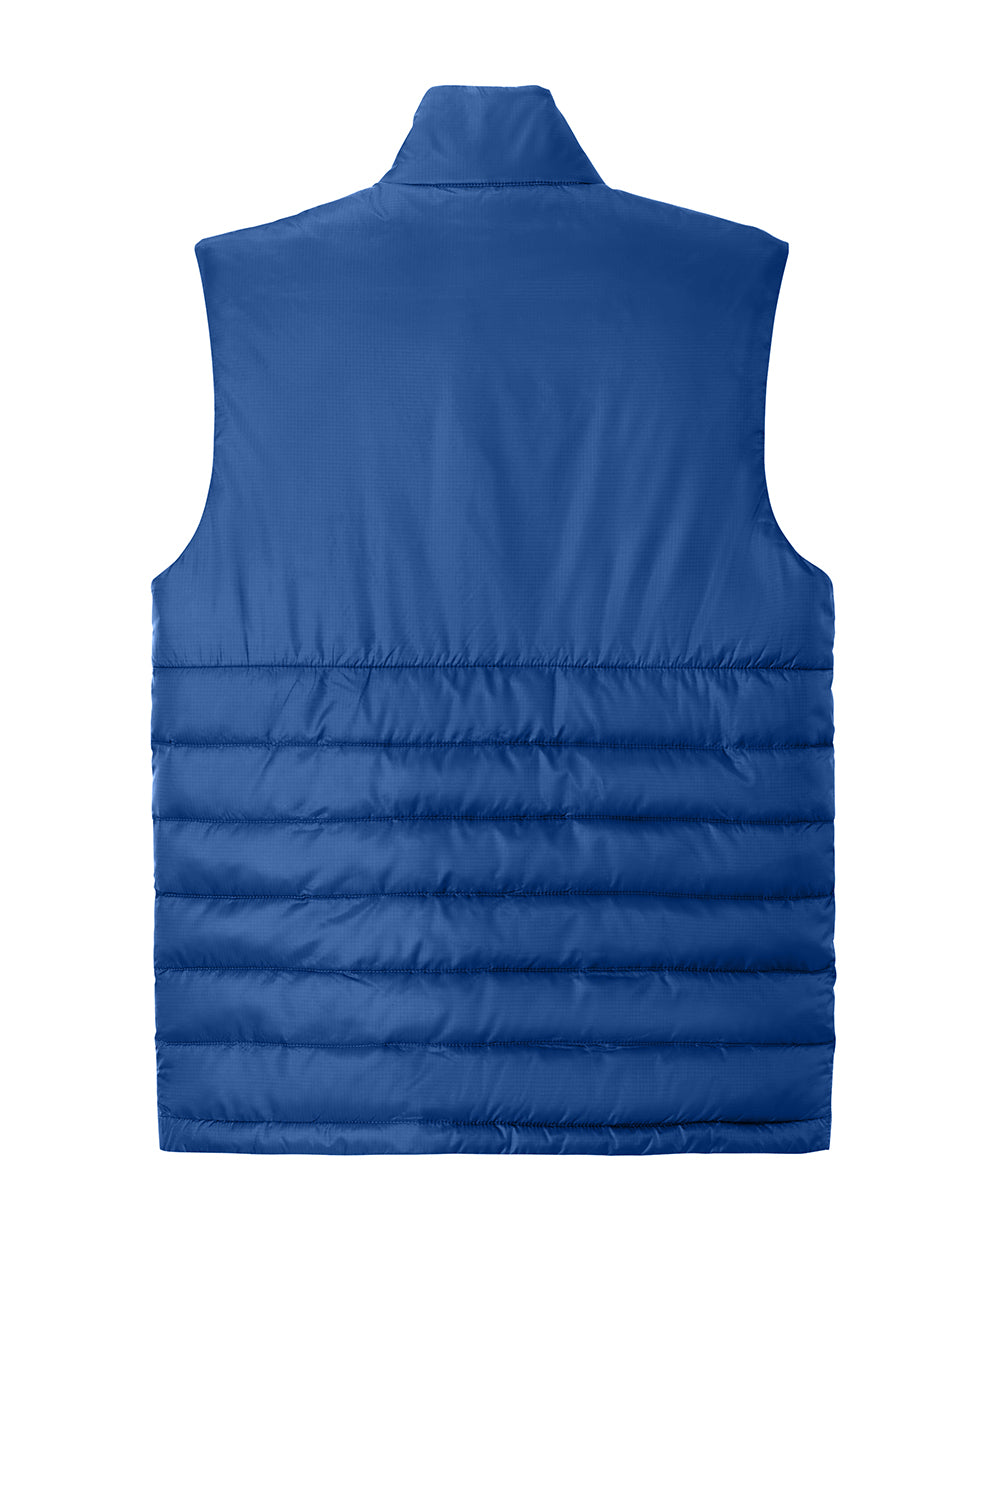 Eddie Bauer EB512 Mens Water Resistant Quilted Full Zip Vest Cobalt Blue Flat Back